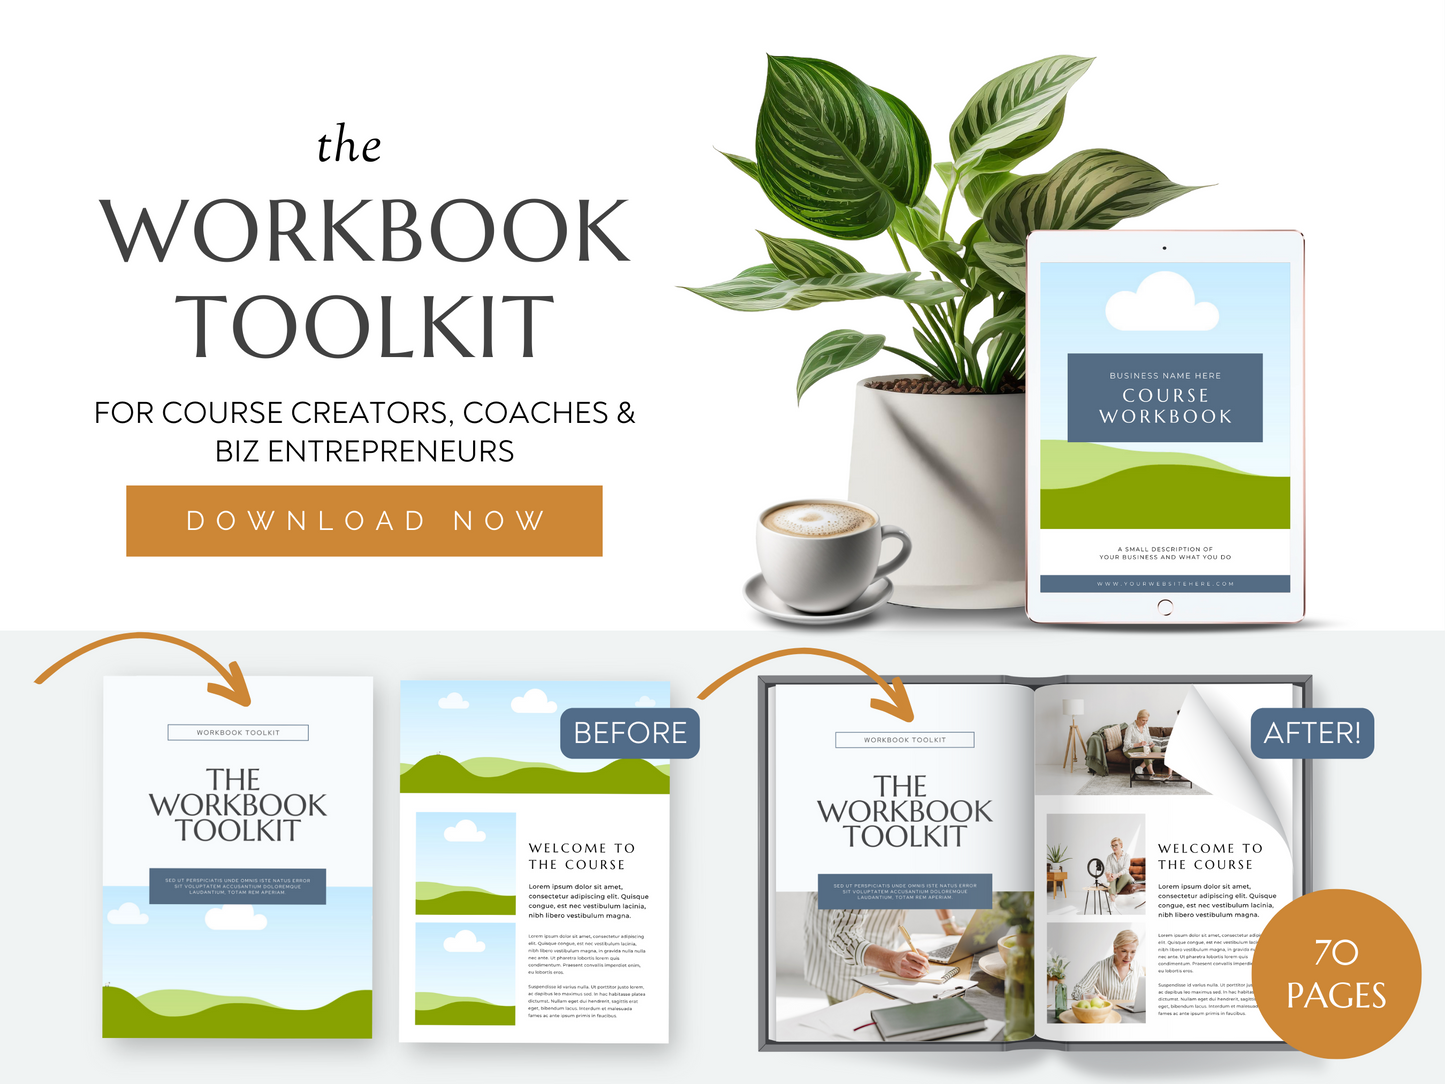 The Workbook Toolkit